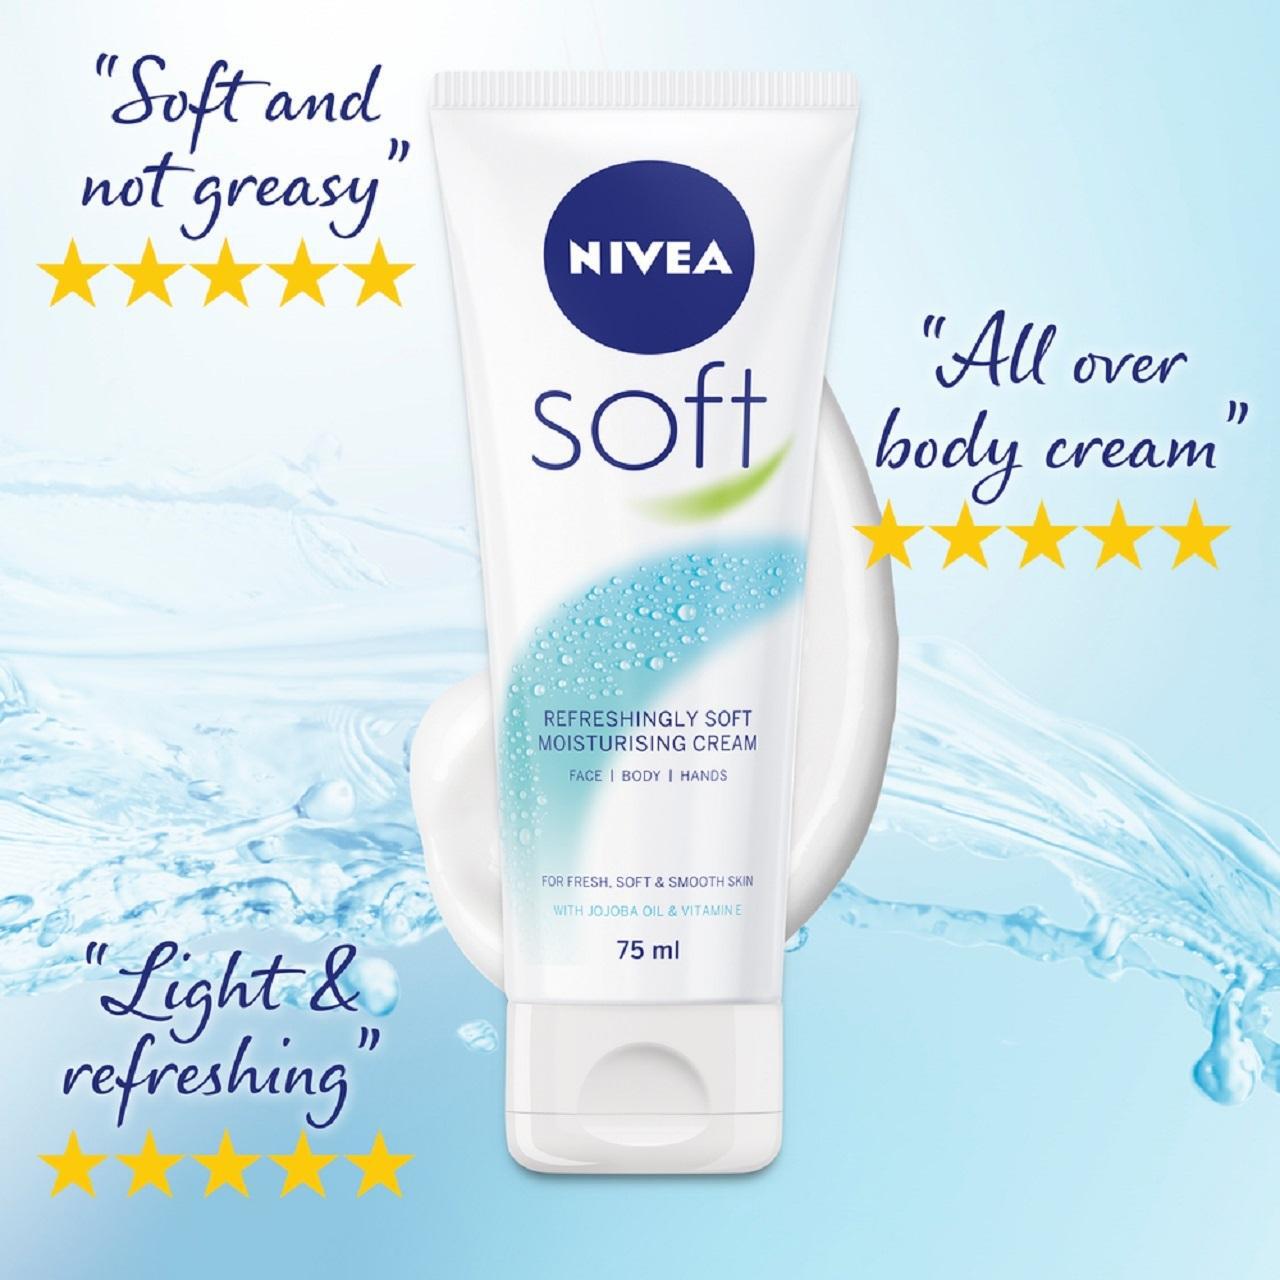 NIVEA Soft Moisturiser Cream for face, hands and body, 75ml